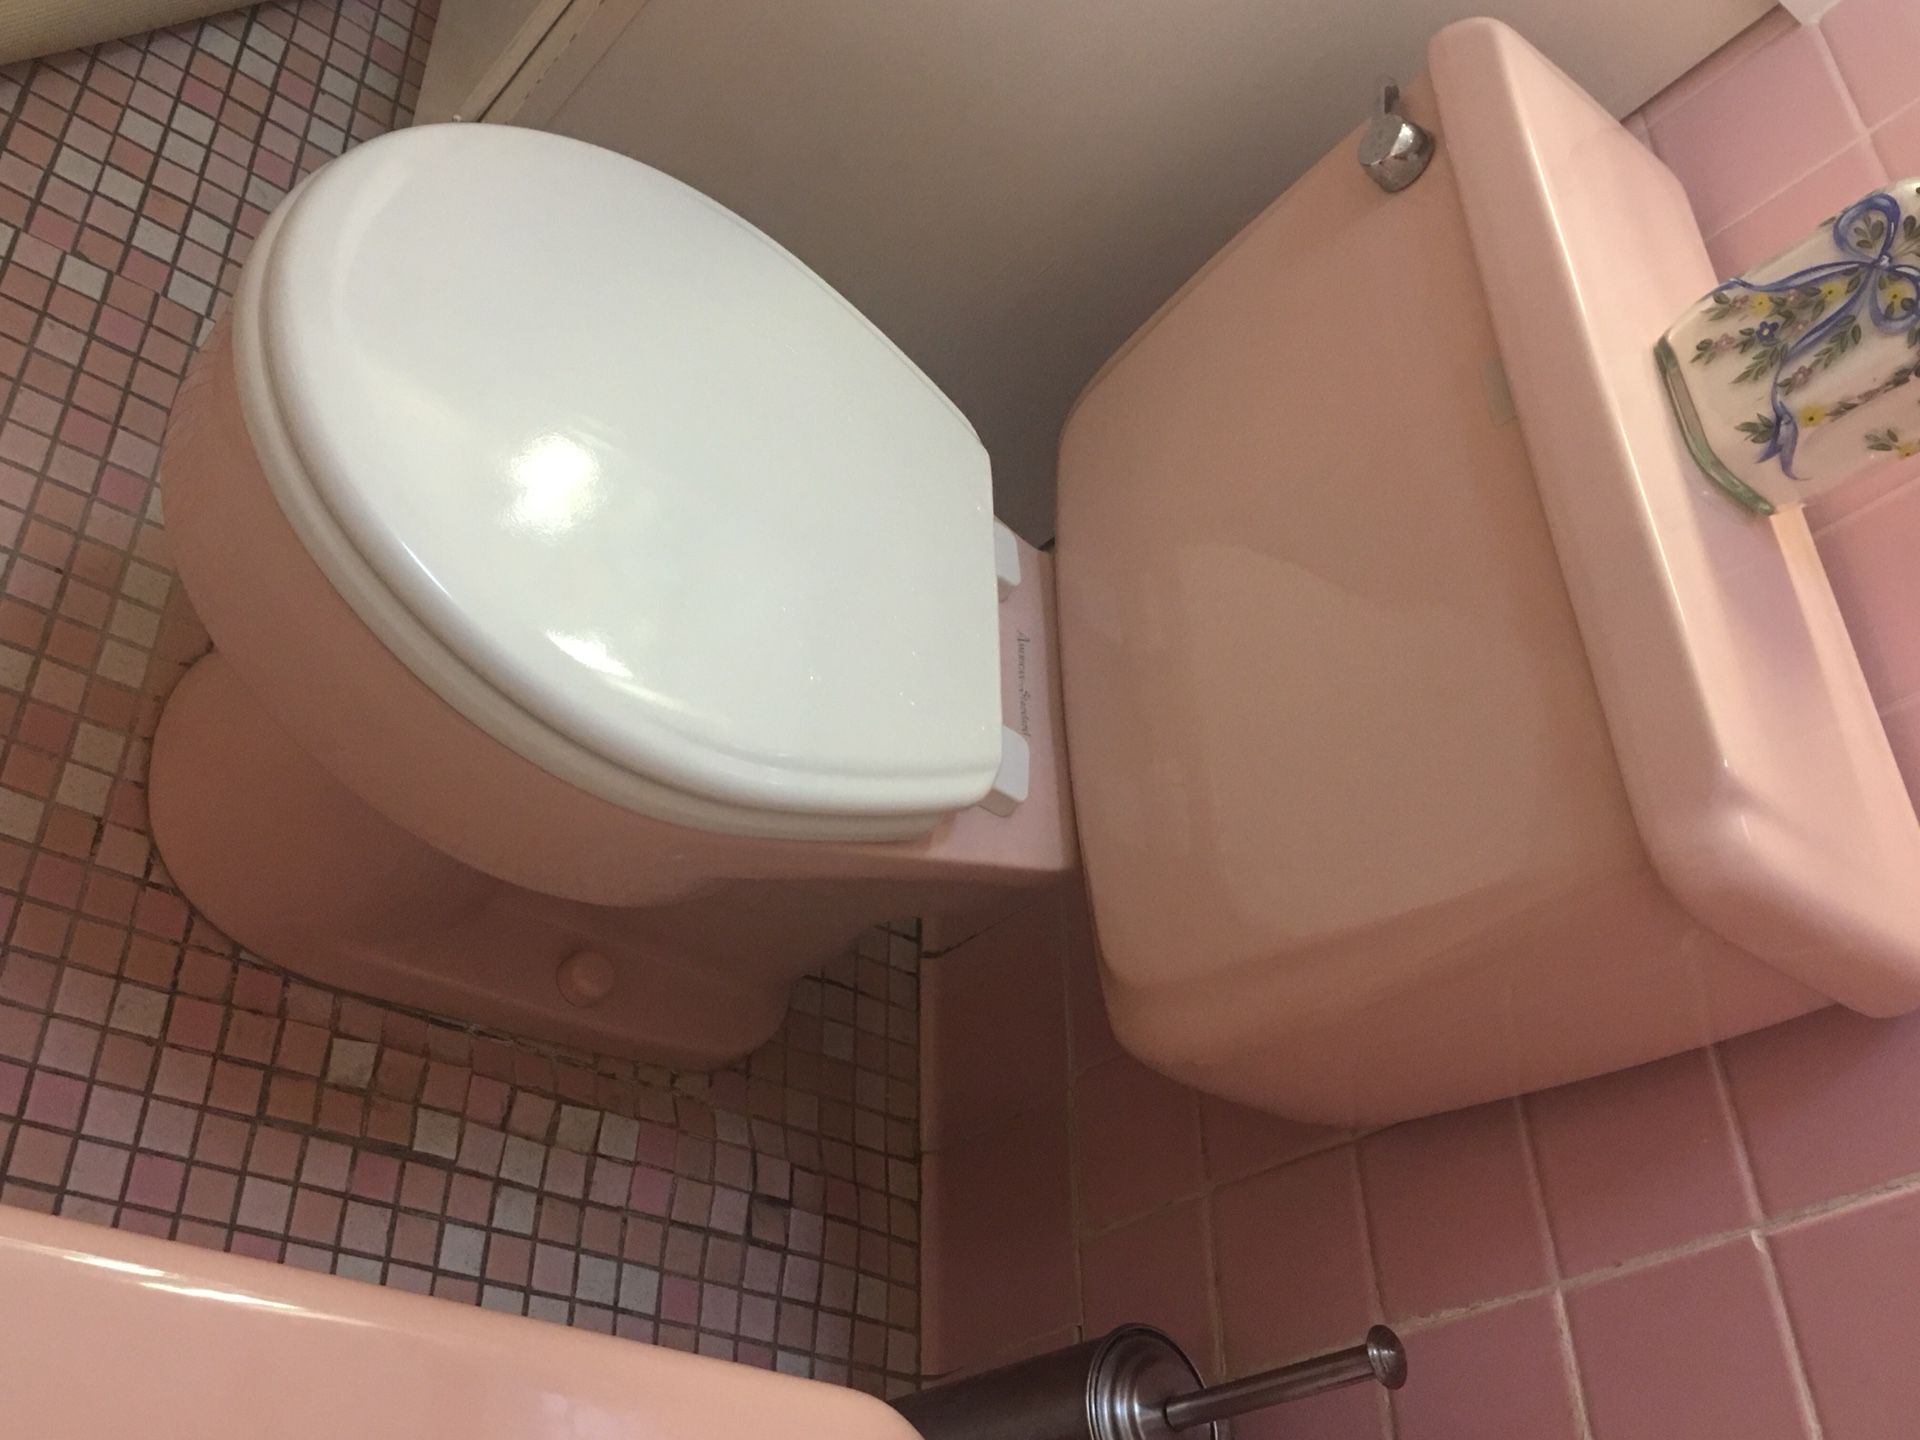 Vintage rose toilet